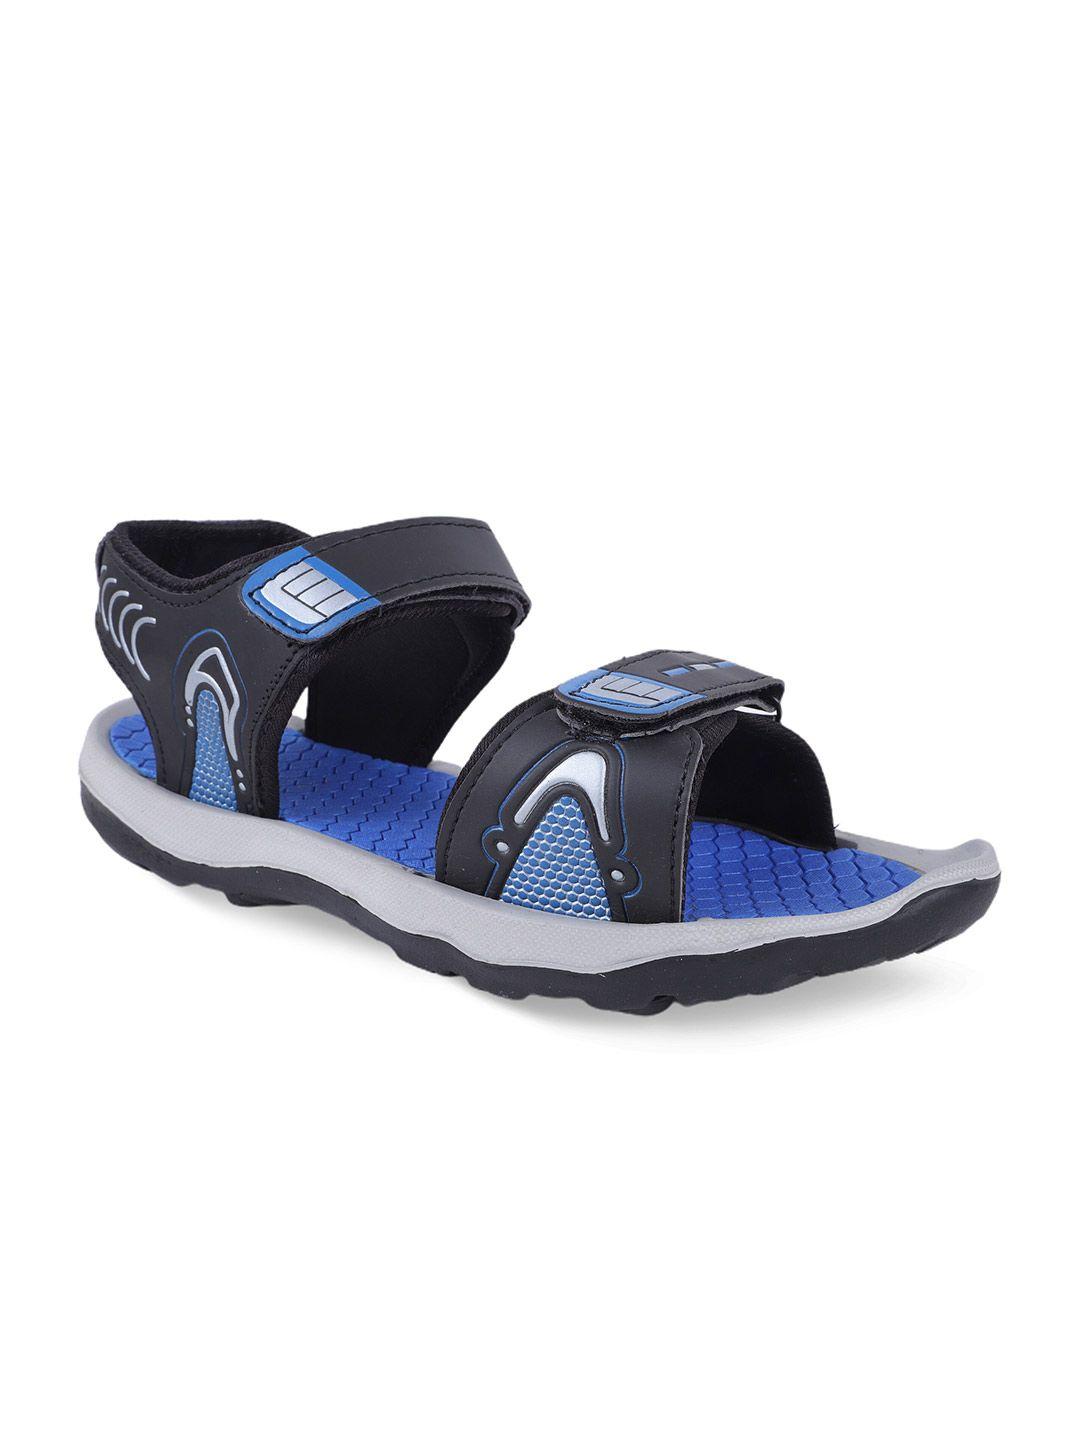 fabbmate men blue & black sports sandals